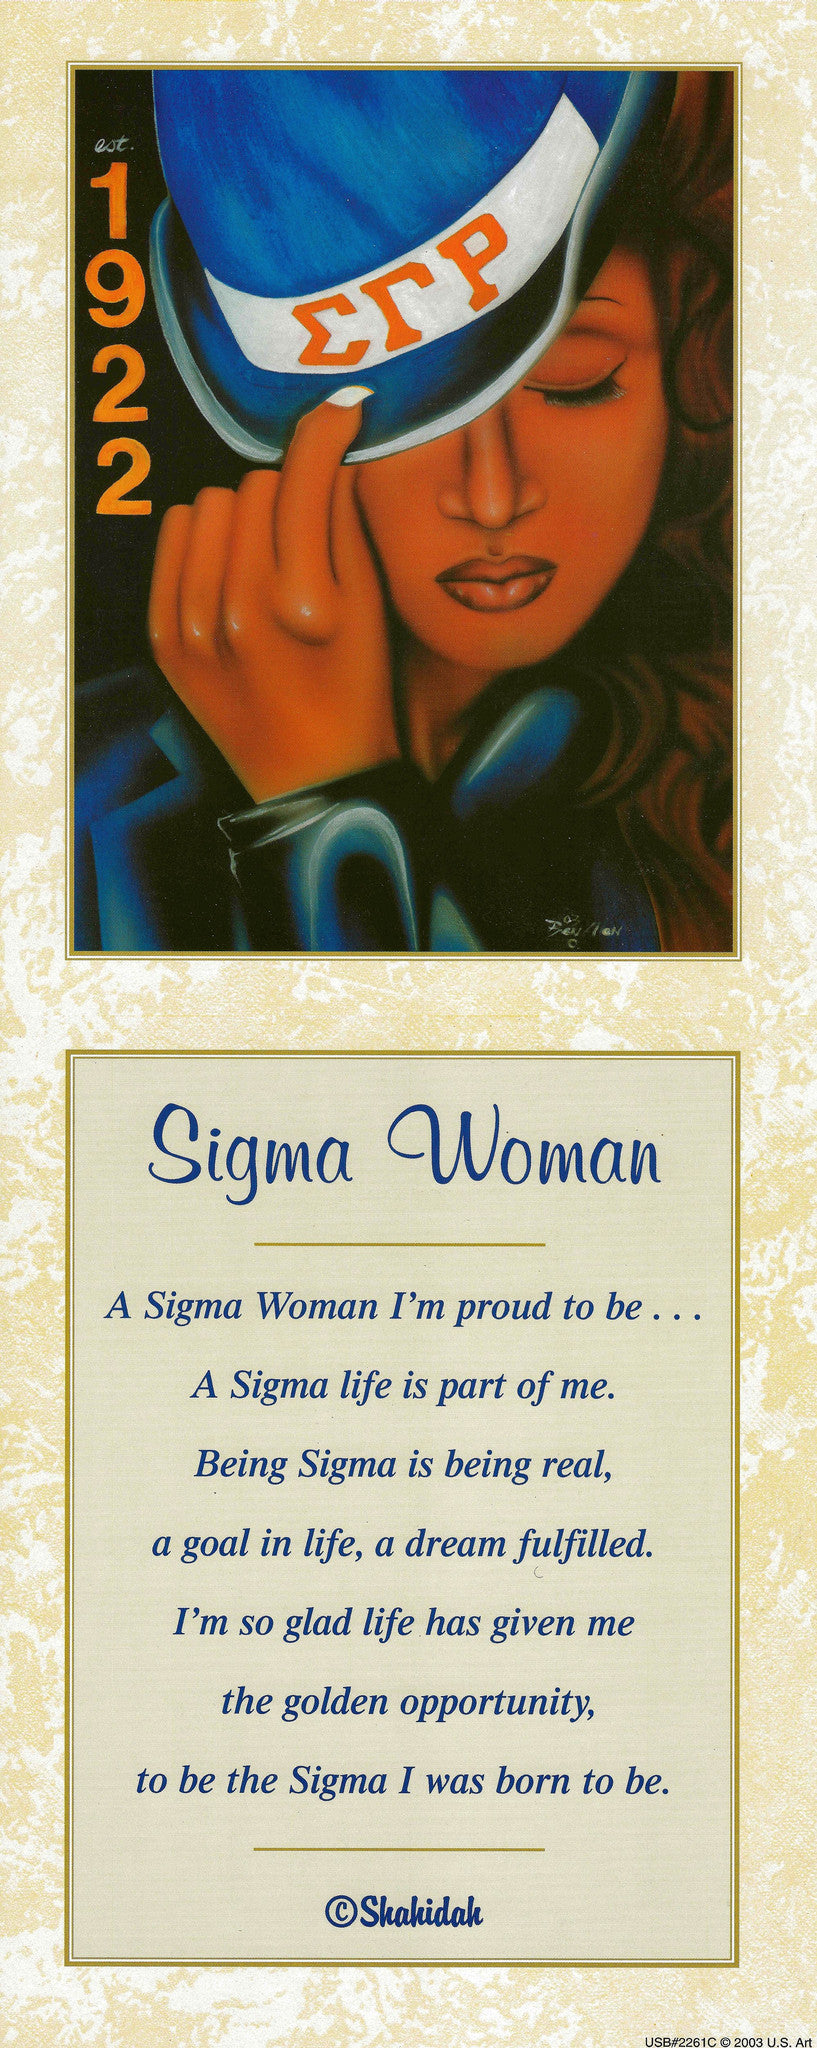 Sigma Woman by Fred Mathews and Shahidah